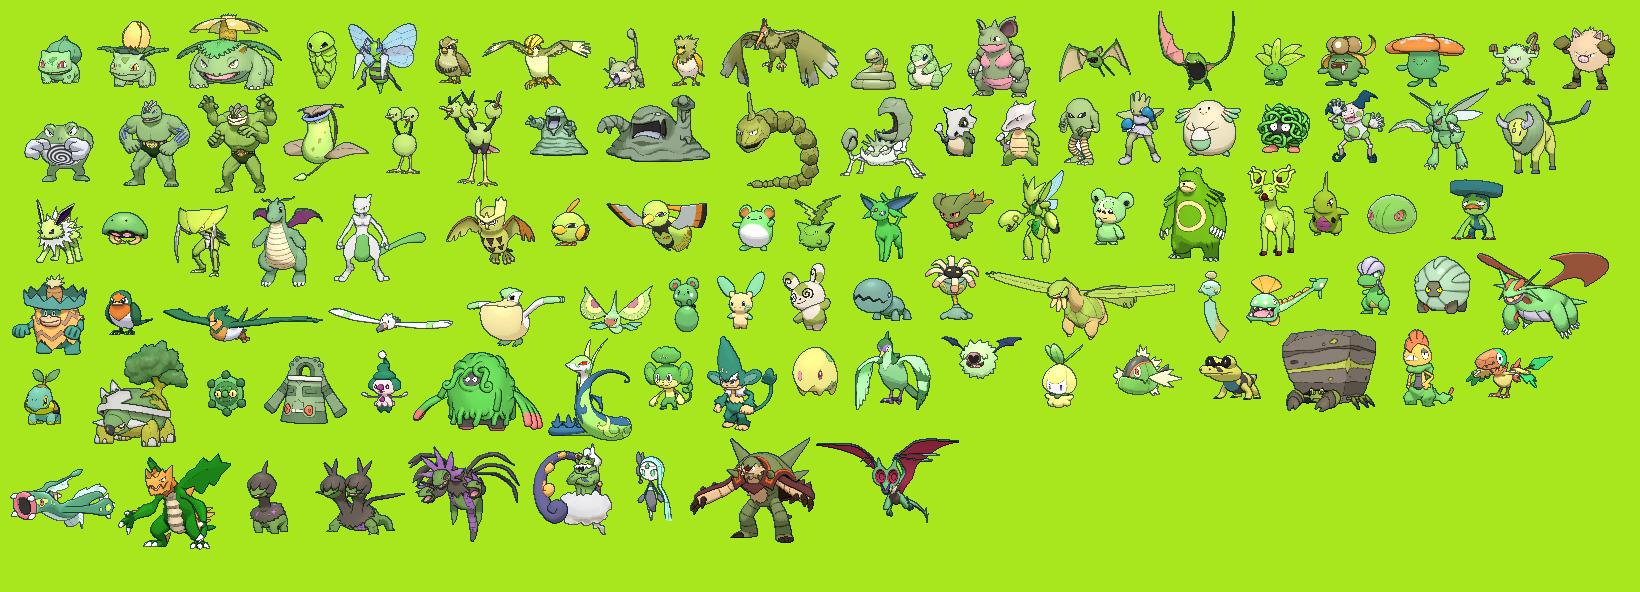 The Best Shiny Pokemon Of Each Region